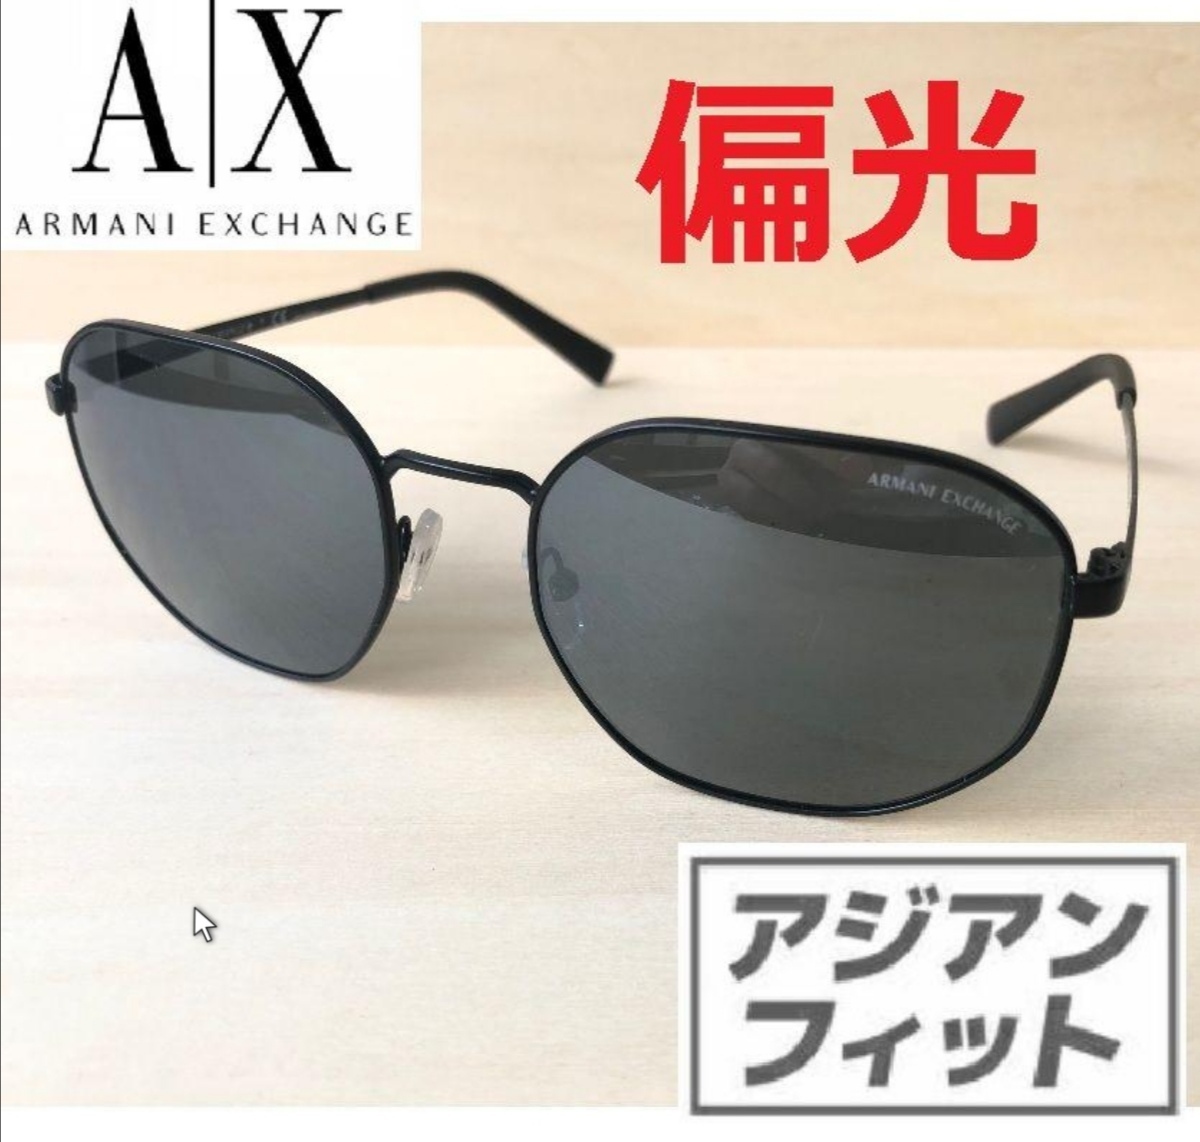  поляризованный свет Armani ARMANI солнцезащитные очки очки очки очки раунд type Boston стандартный товар AX Armani Exchange ARMANI EXCHANGE